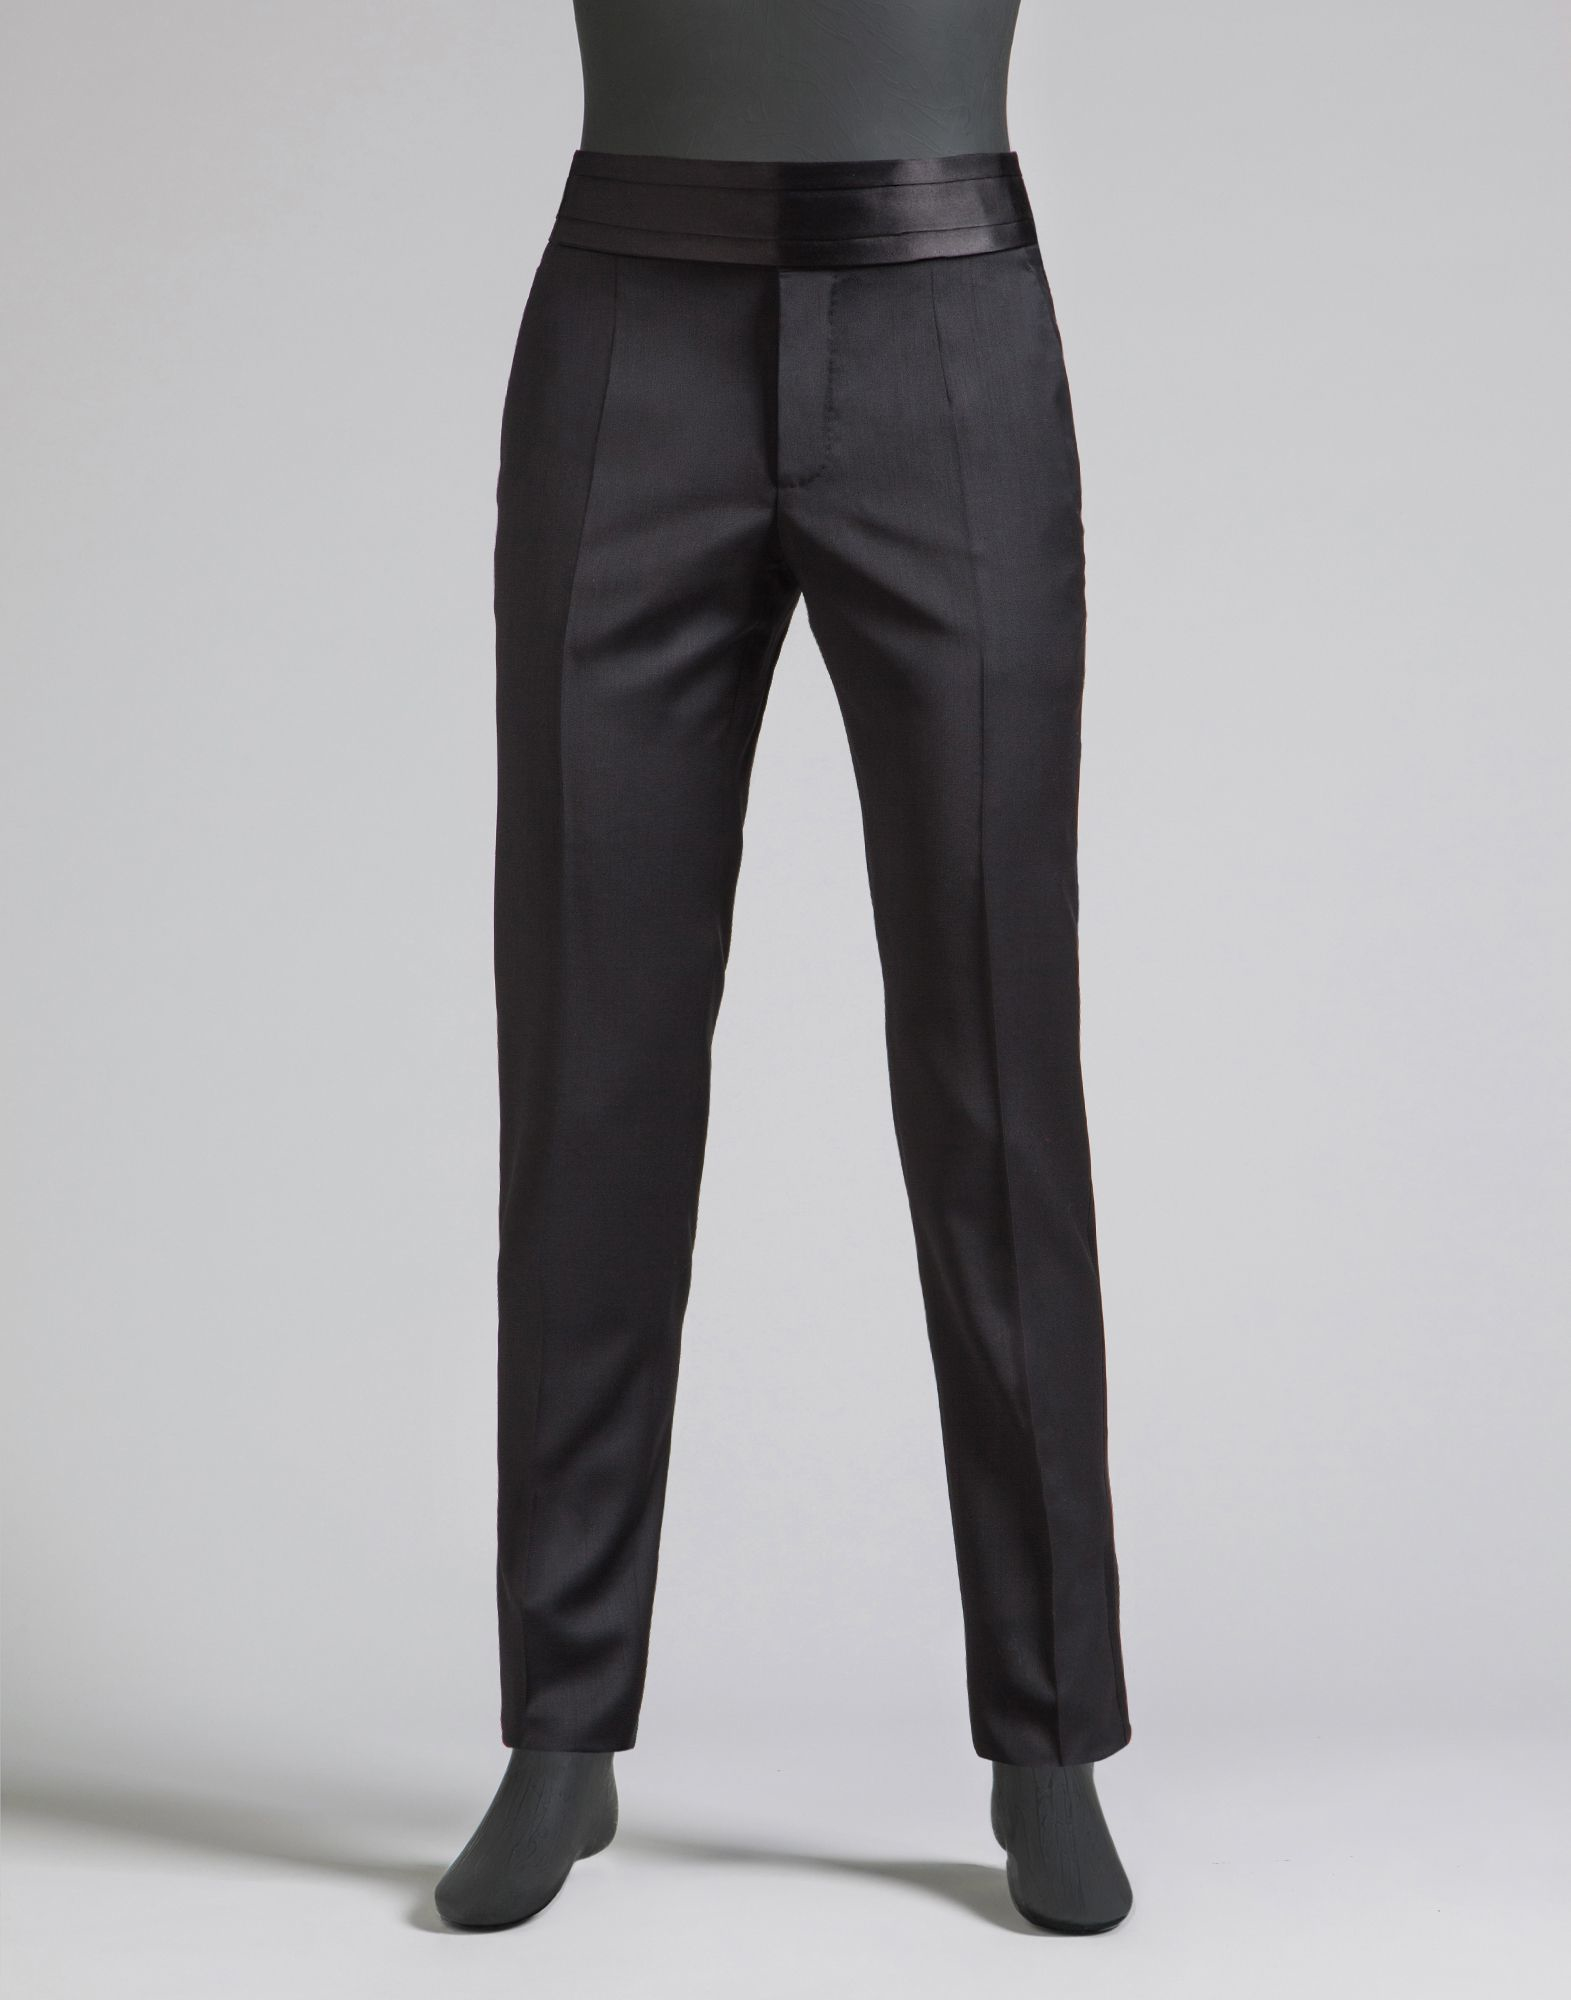 Men039s Tailored Slim Fit Black Flat Front Tuxedo Pants Dress Slacks By  Azar Man  eBay